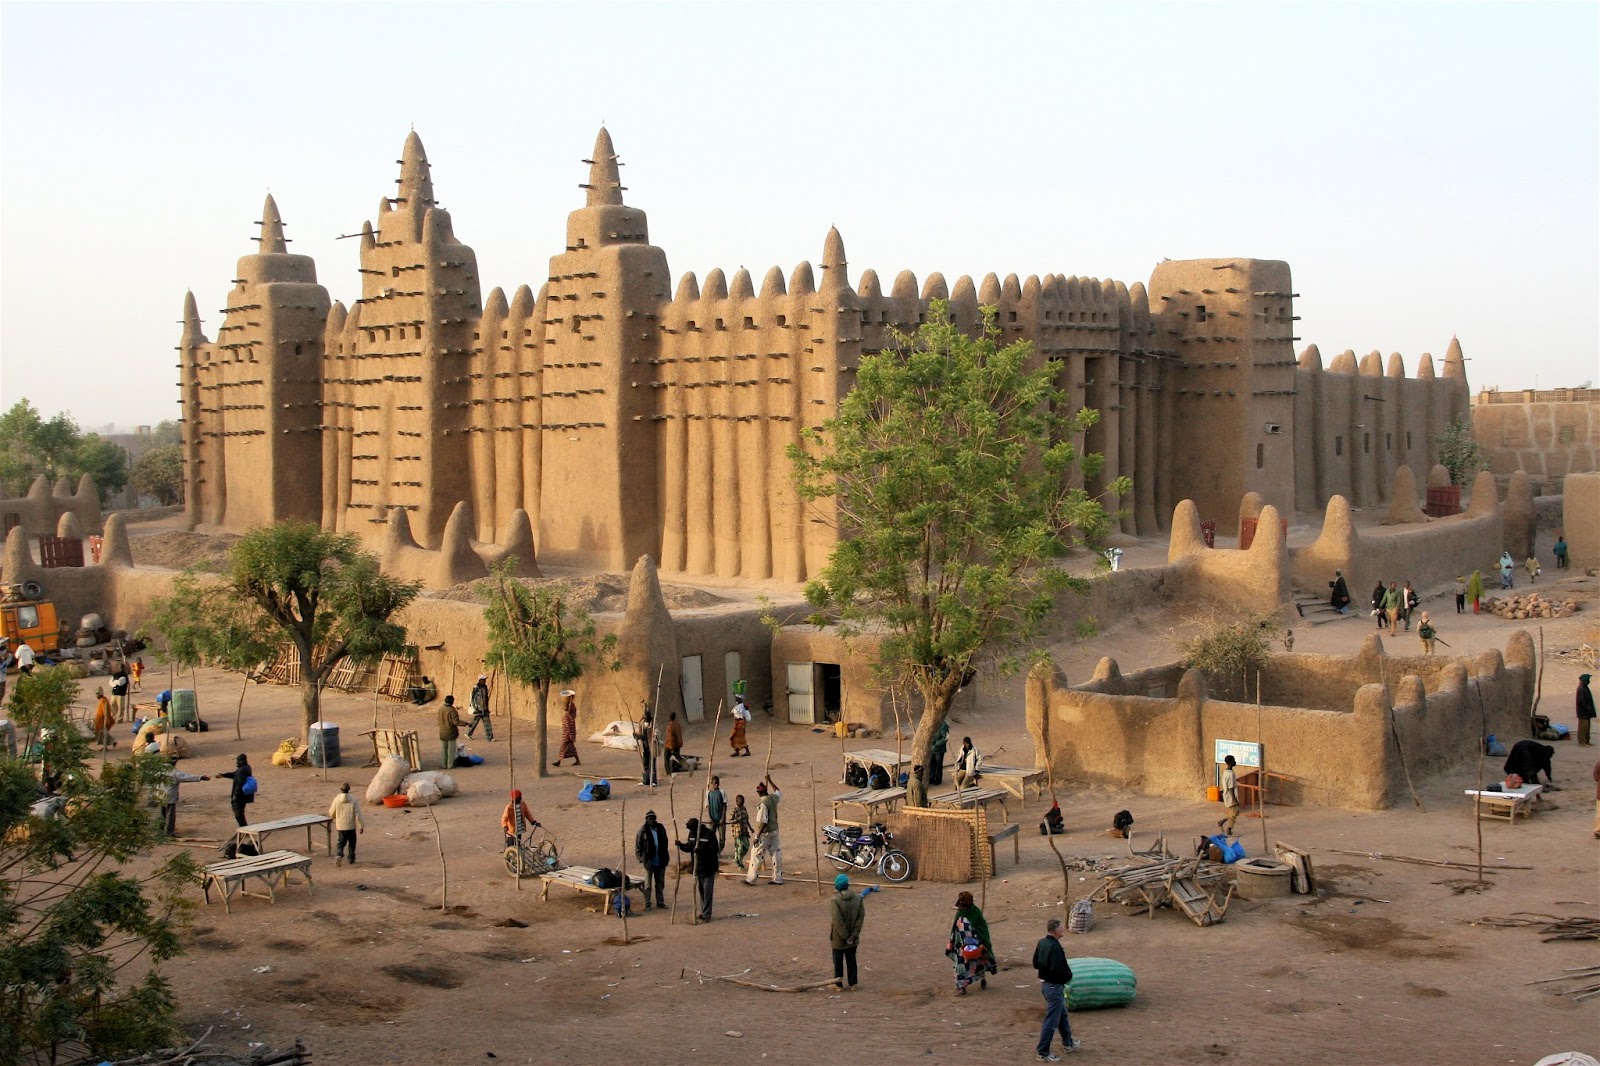 The groß moschee Djenne Mali